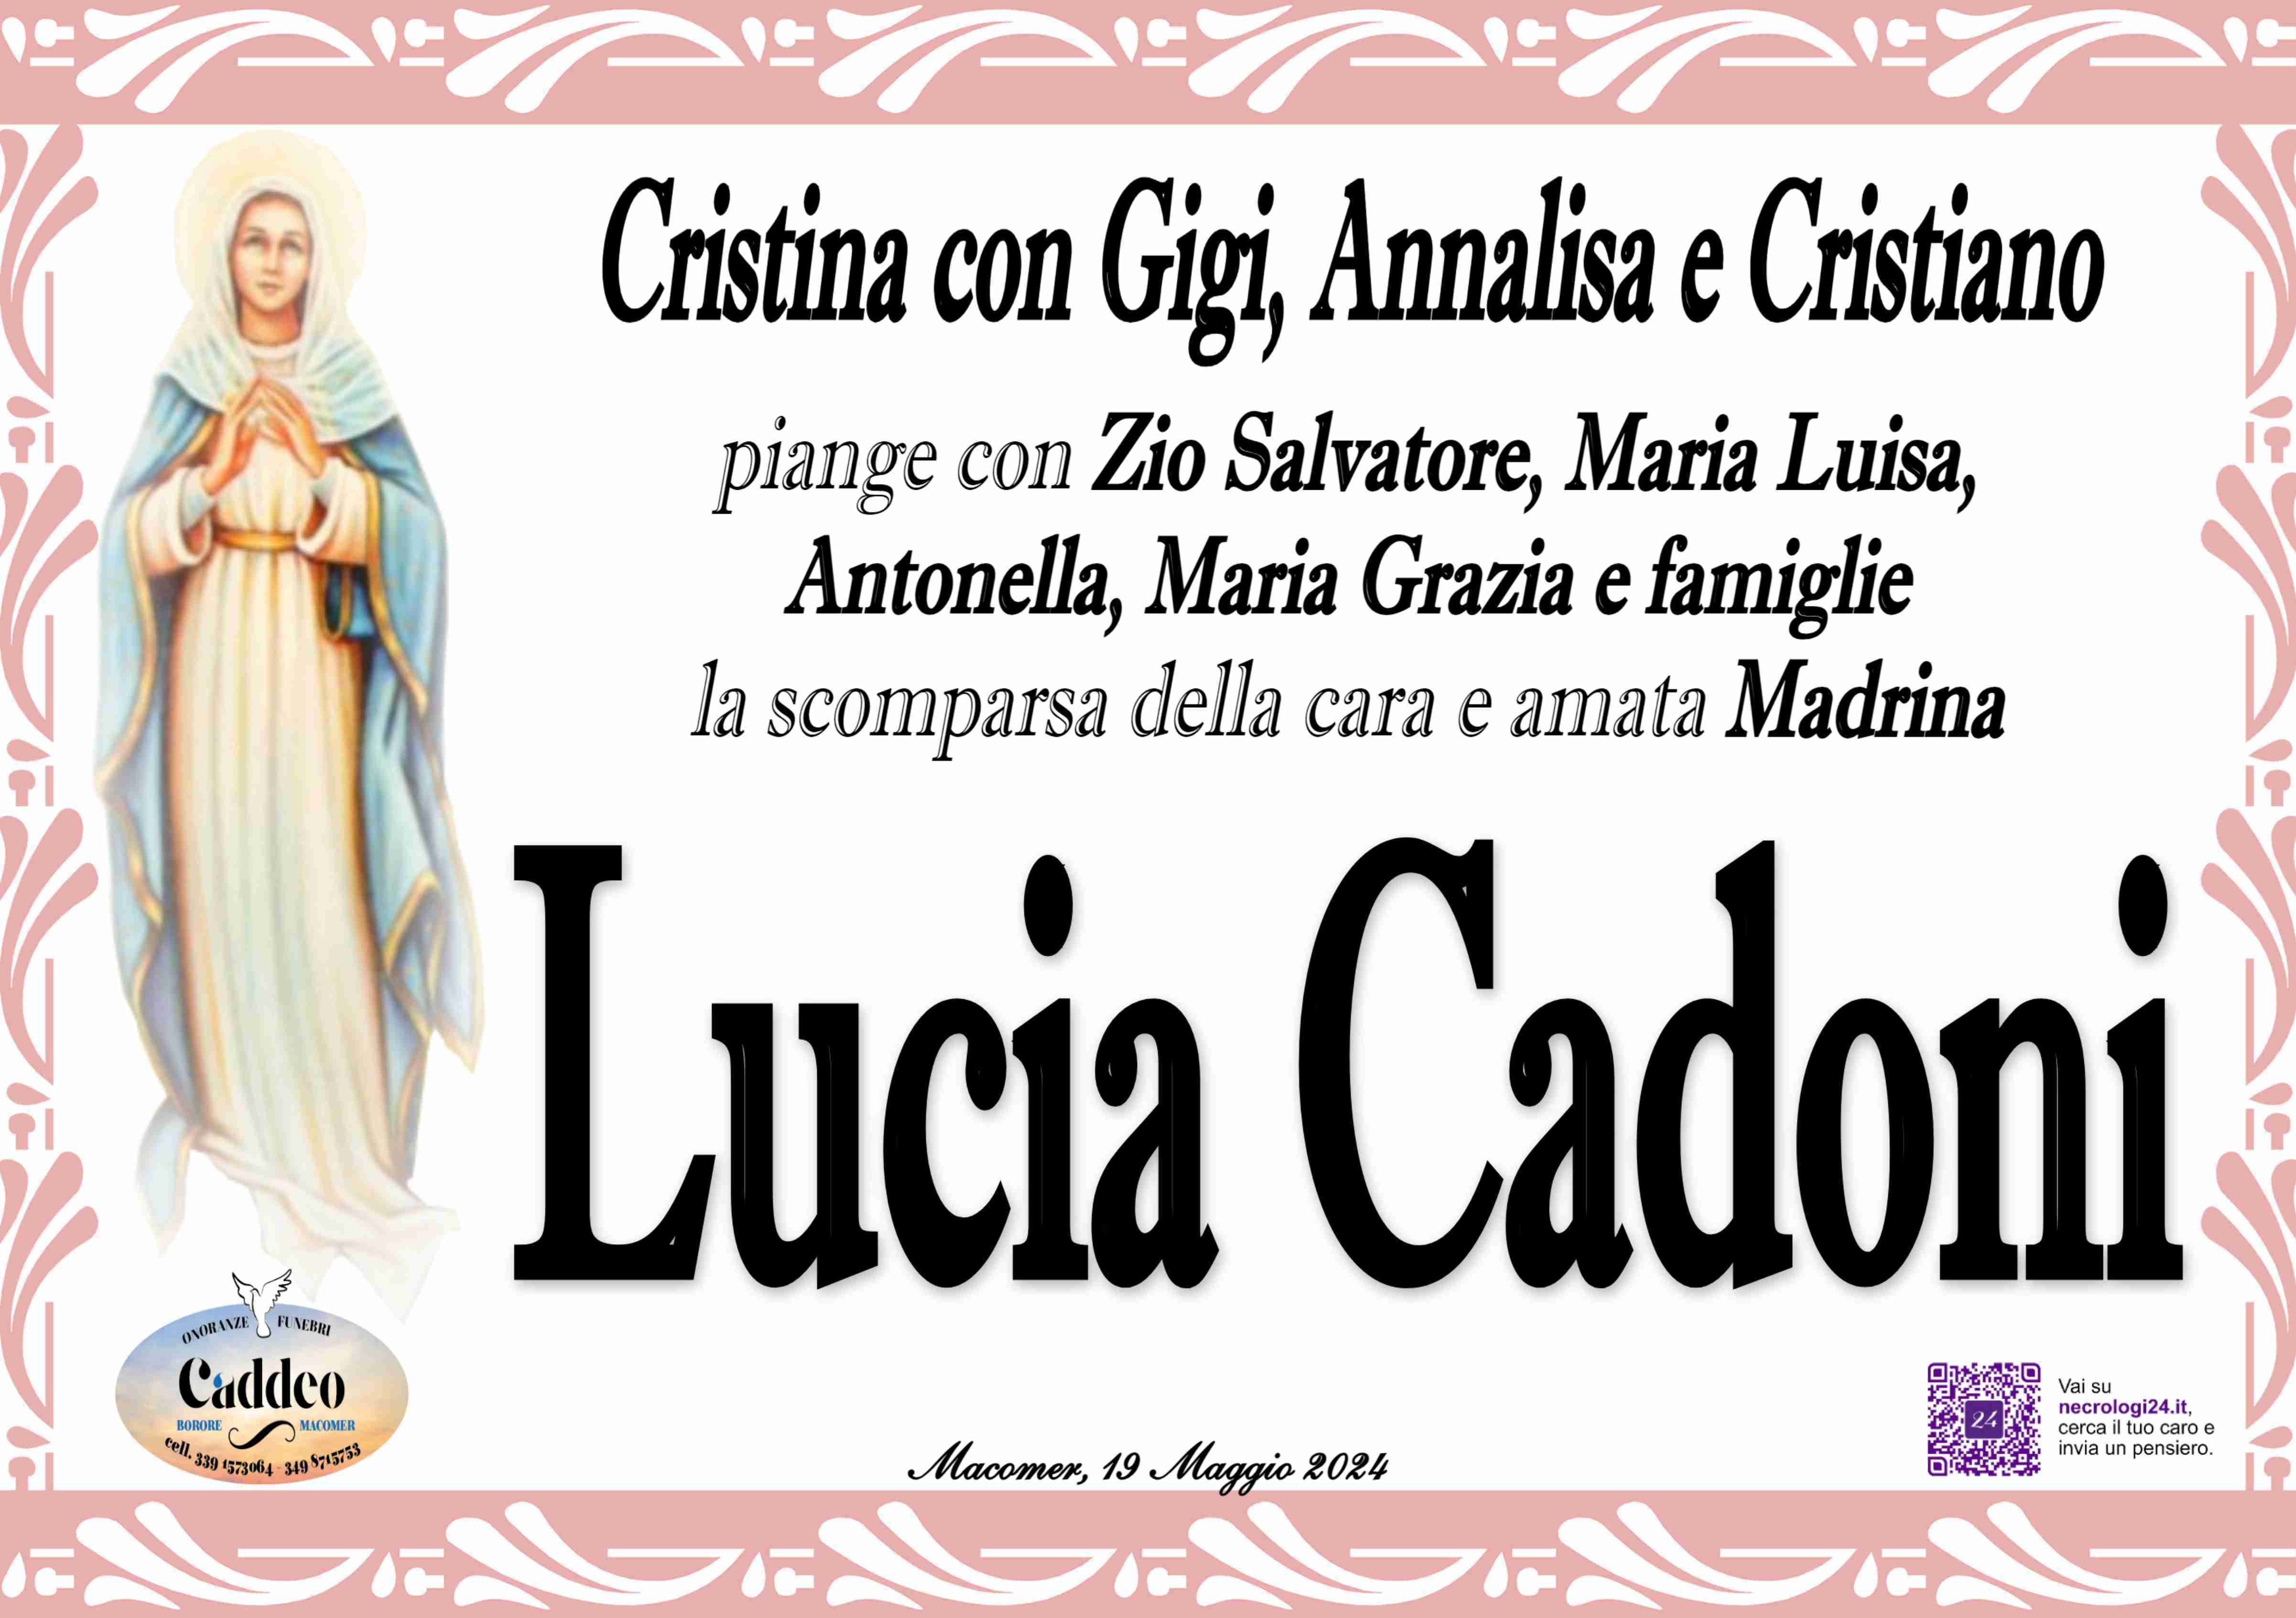 Lucia Cadoni